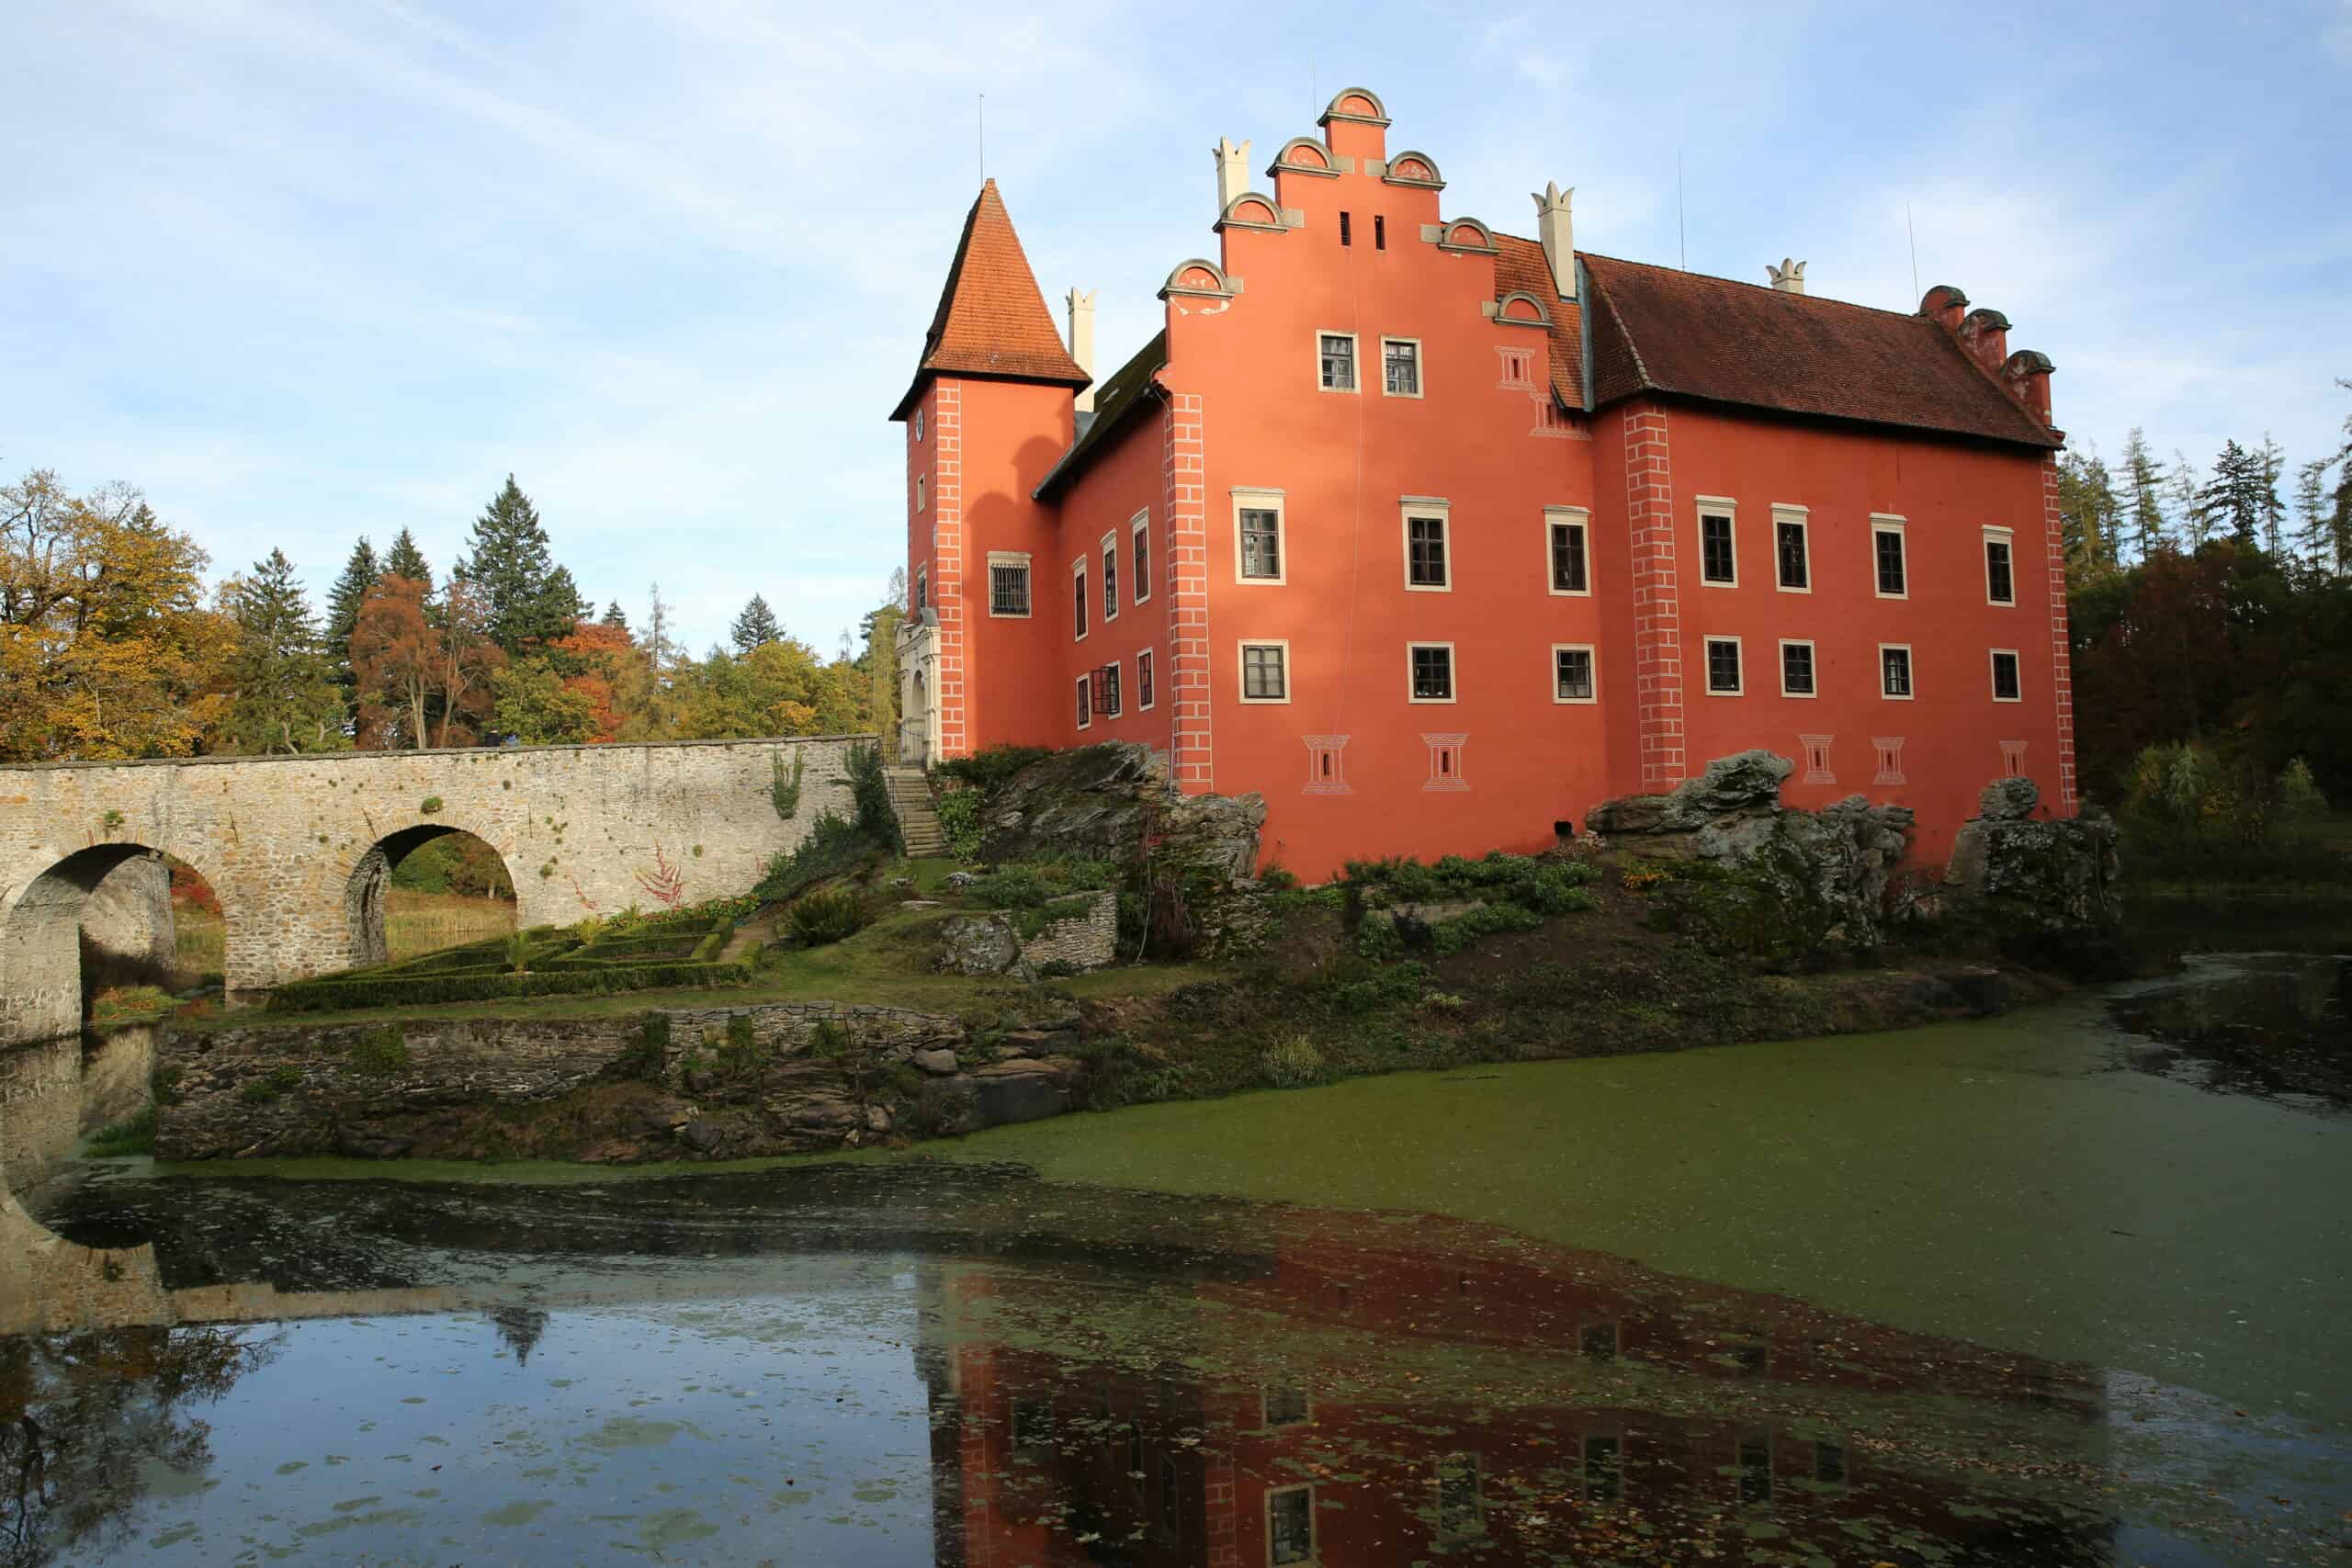 Zamek Cervena Lhota, considered one of the most beautiful castles in Czech Republic